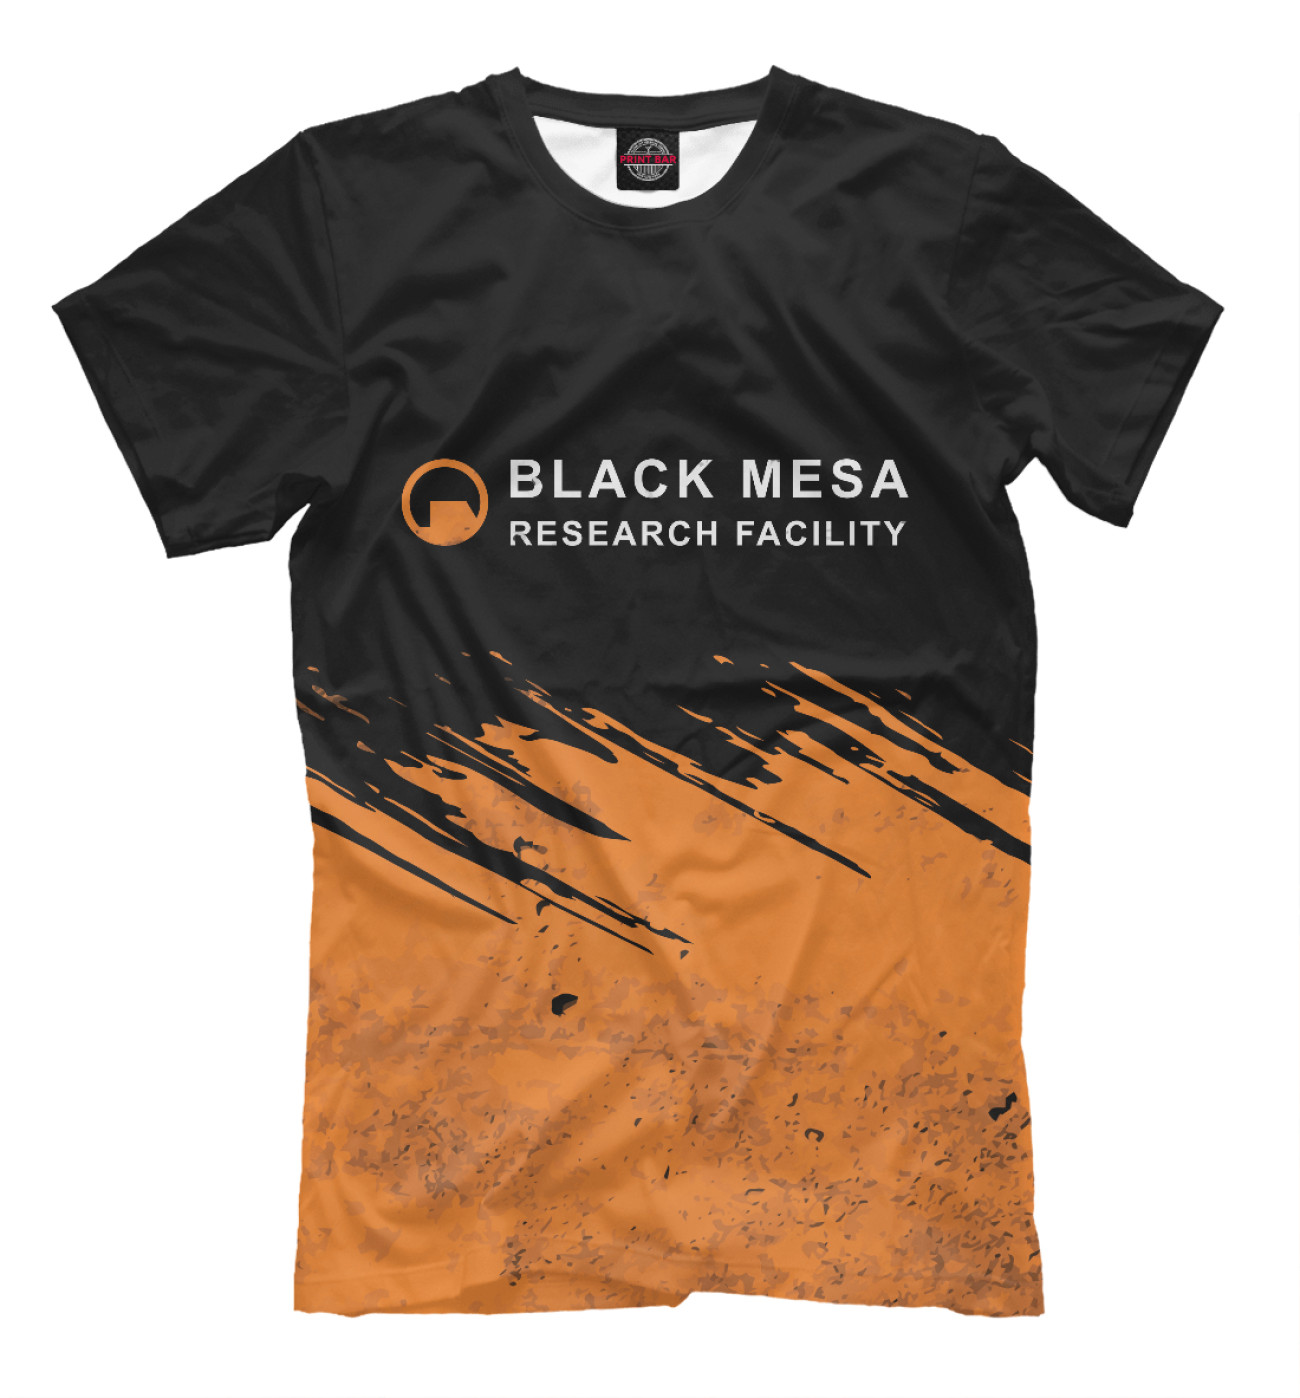 Мужская Футболка Half-Life - Black Mesa, артикул: HLF-346186-fut-2